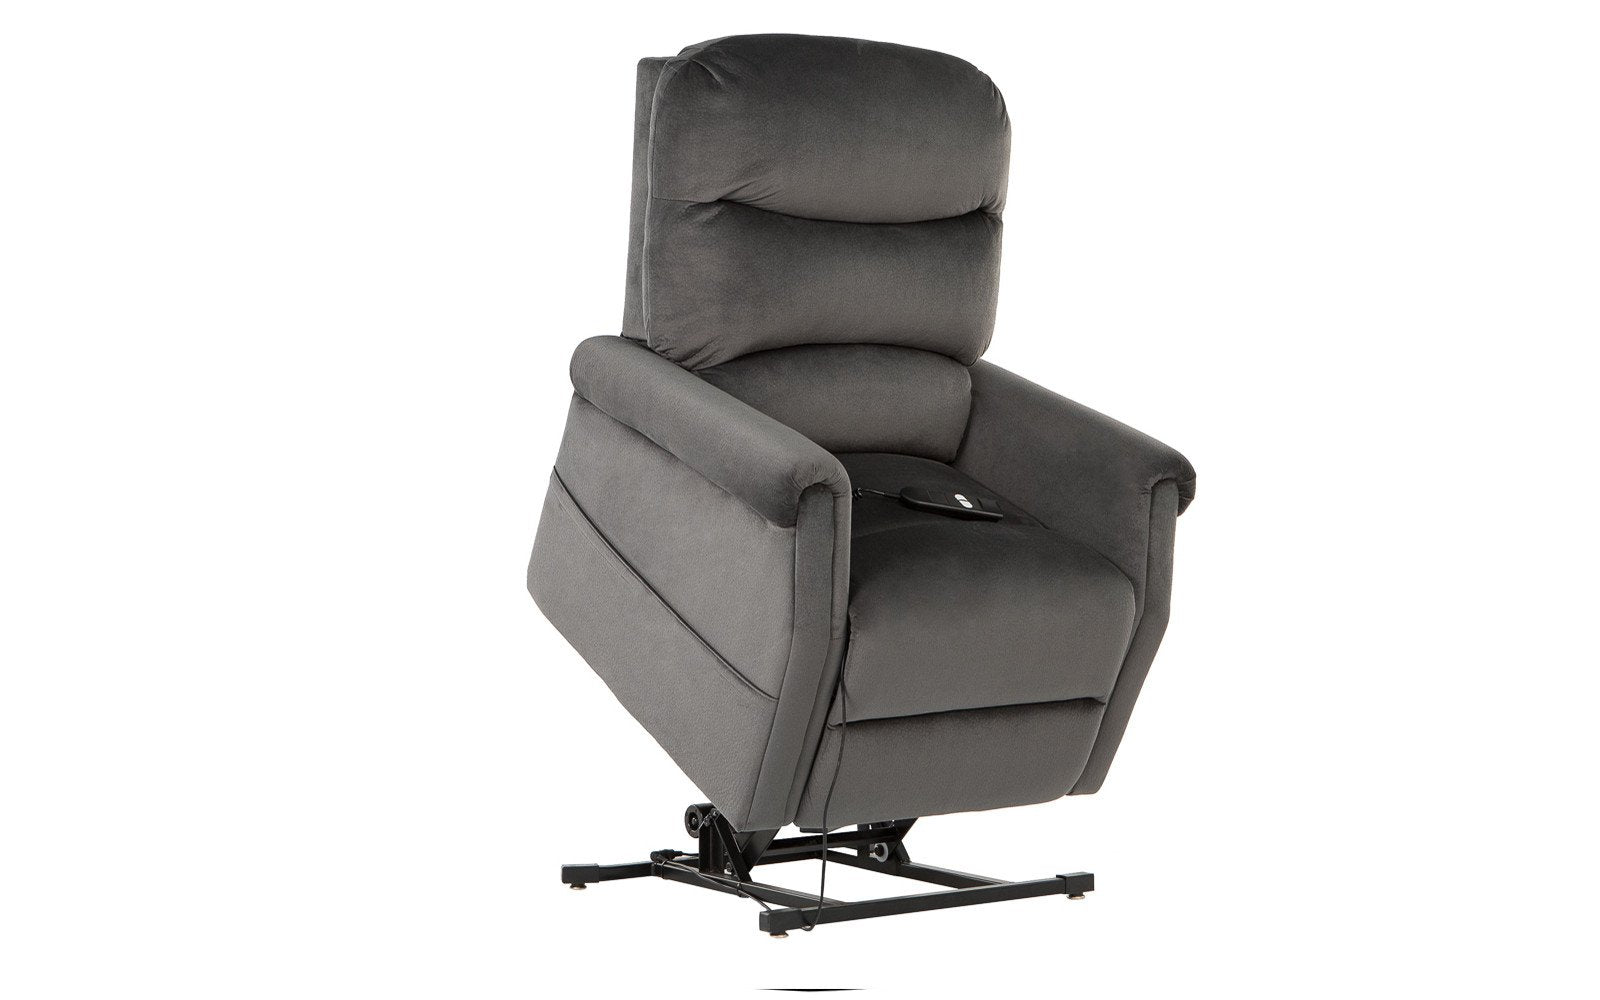 Bob Classic Leather Recliner Chair | Sofamania.com